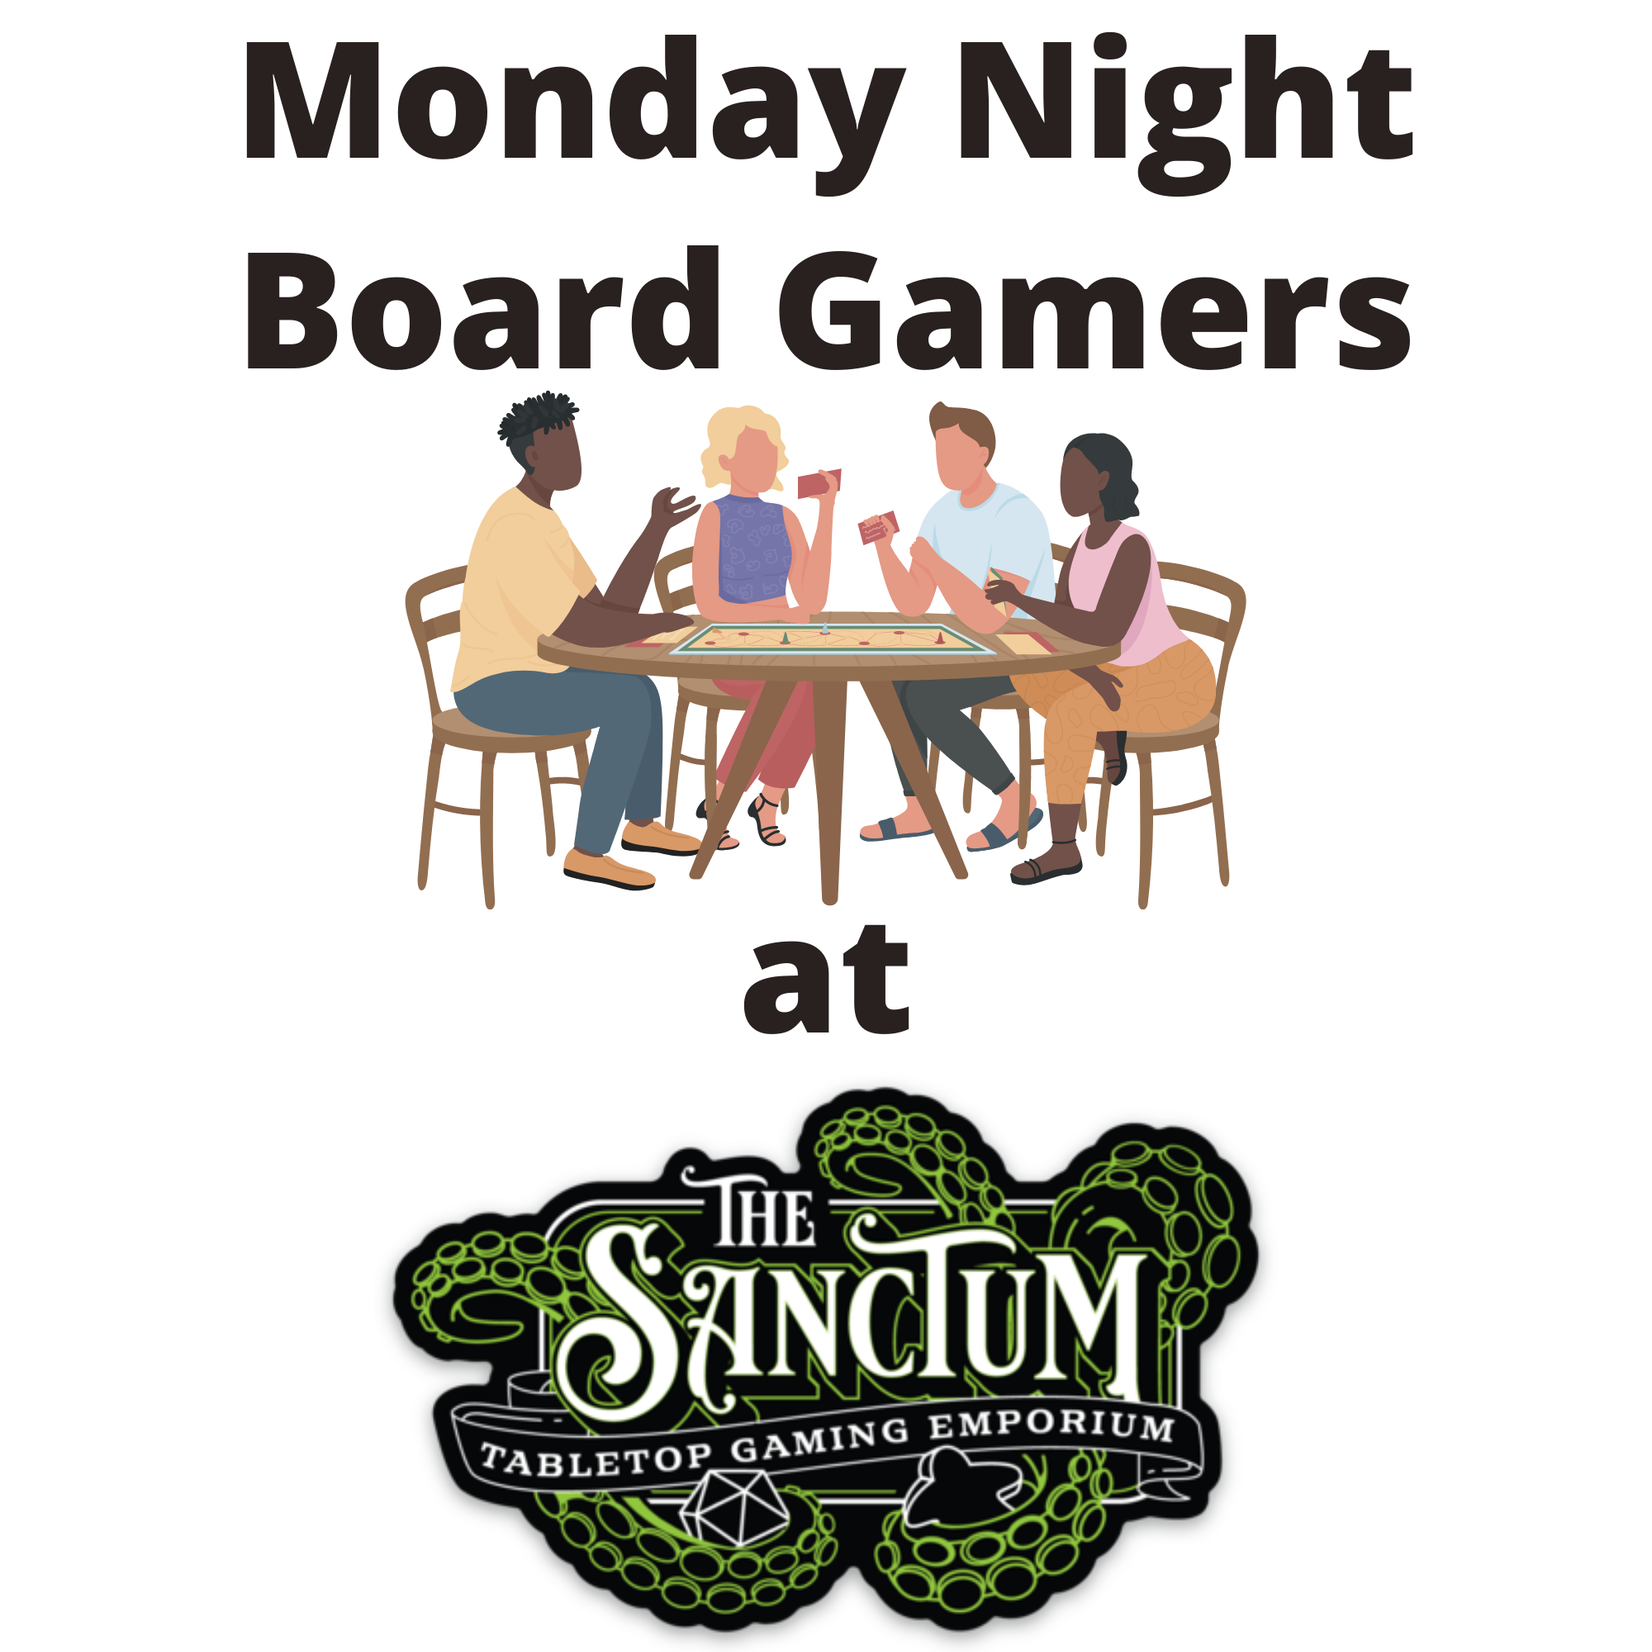 Monday Night Board Gamers, Mondays at 7 pm